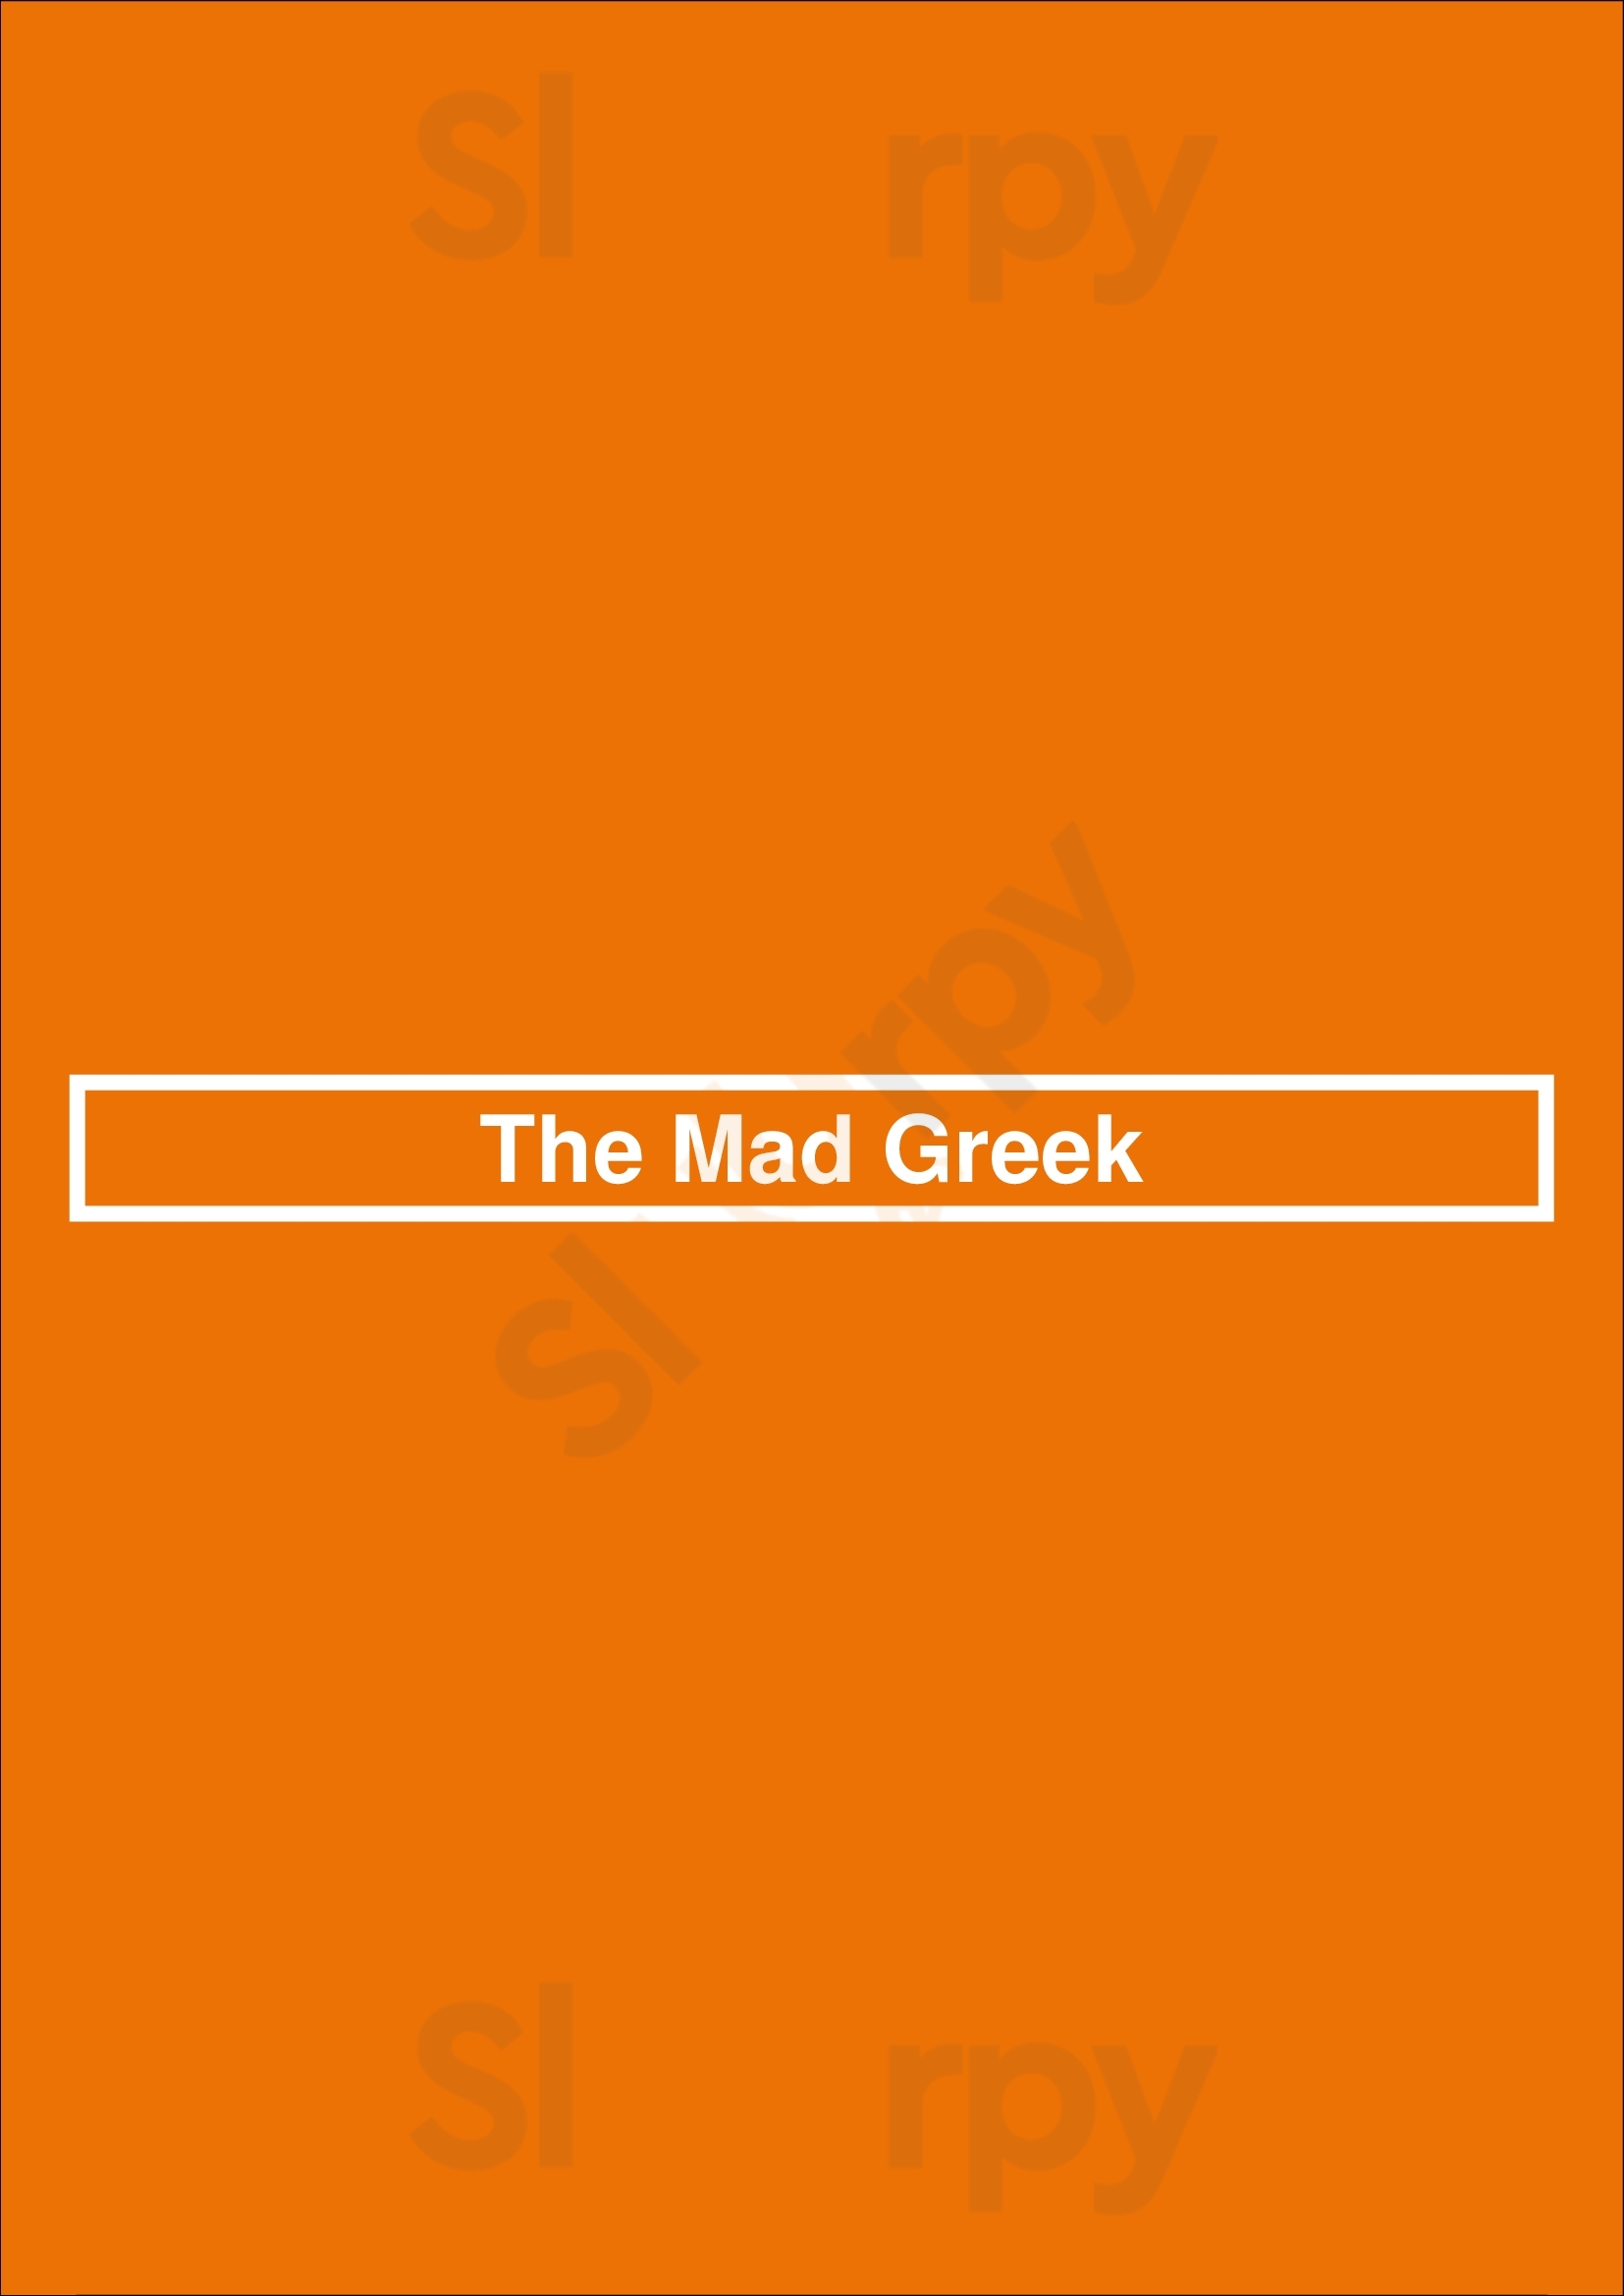 The Mad Greek Leeds Menu - 1